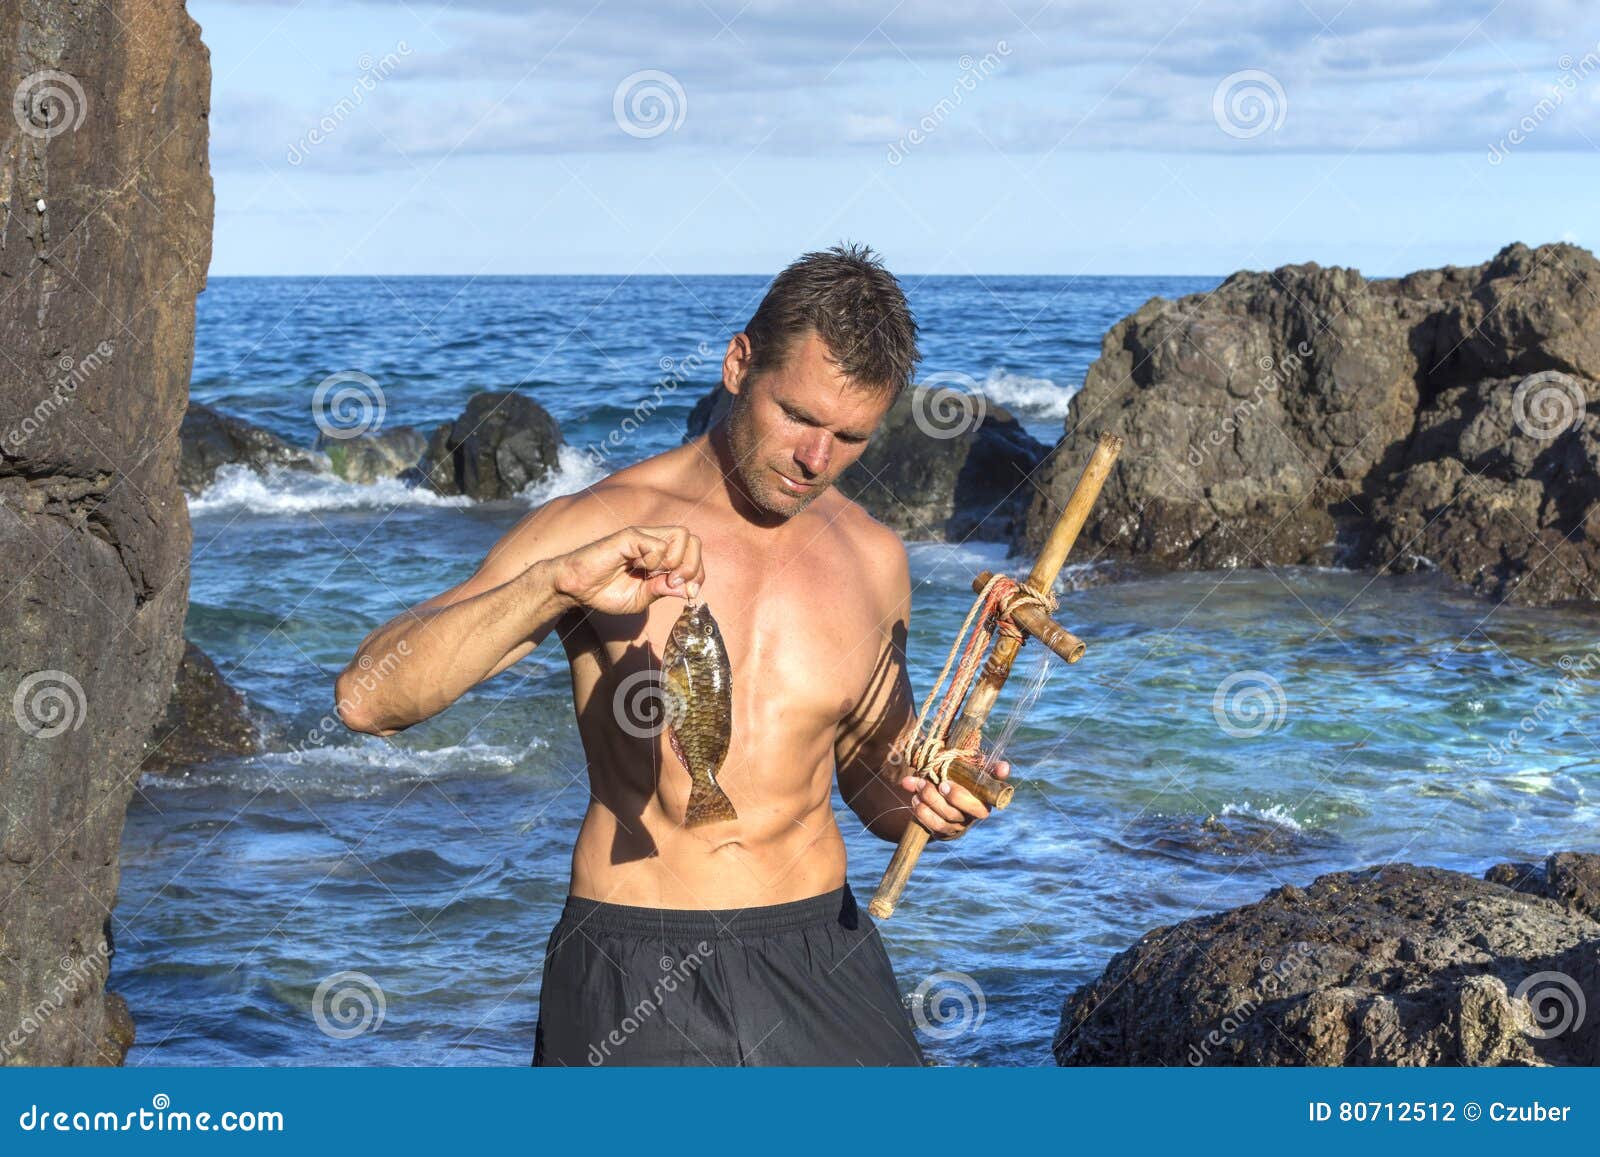 https://thumbs.dreamstime.com/z/castaway-fishing-primitive-tool-lean-shirtless-adventure-man-holds-fresh-caught-parrotfish-rod-rocky-caribbean-shore-80712512.jpg